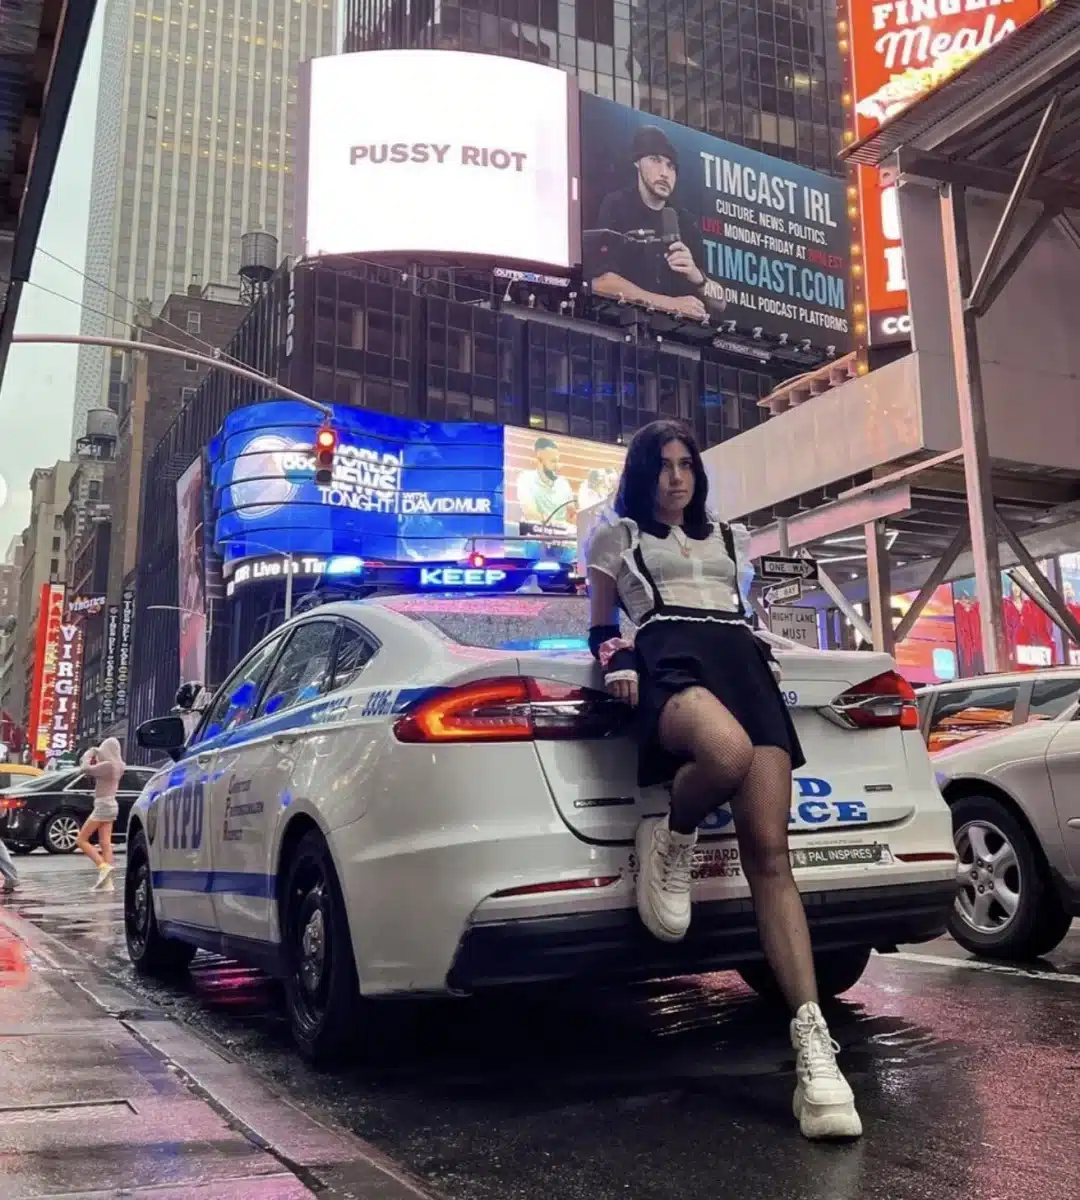 Pussy Riot’s Nadya Tolokonnikova sitting on a car